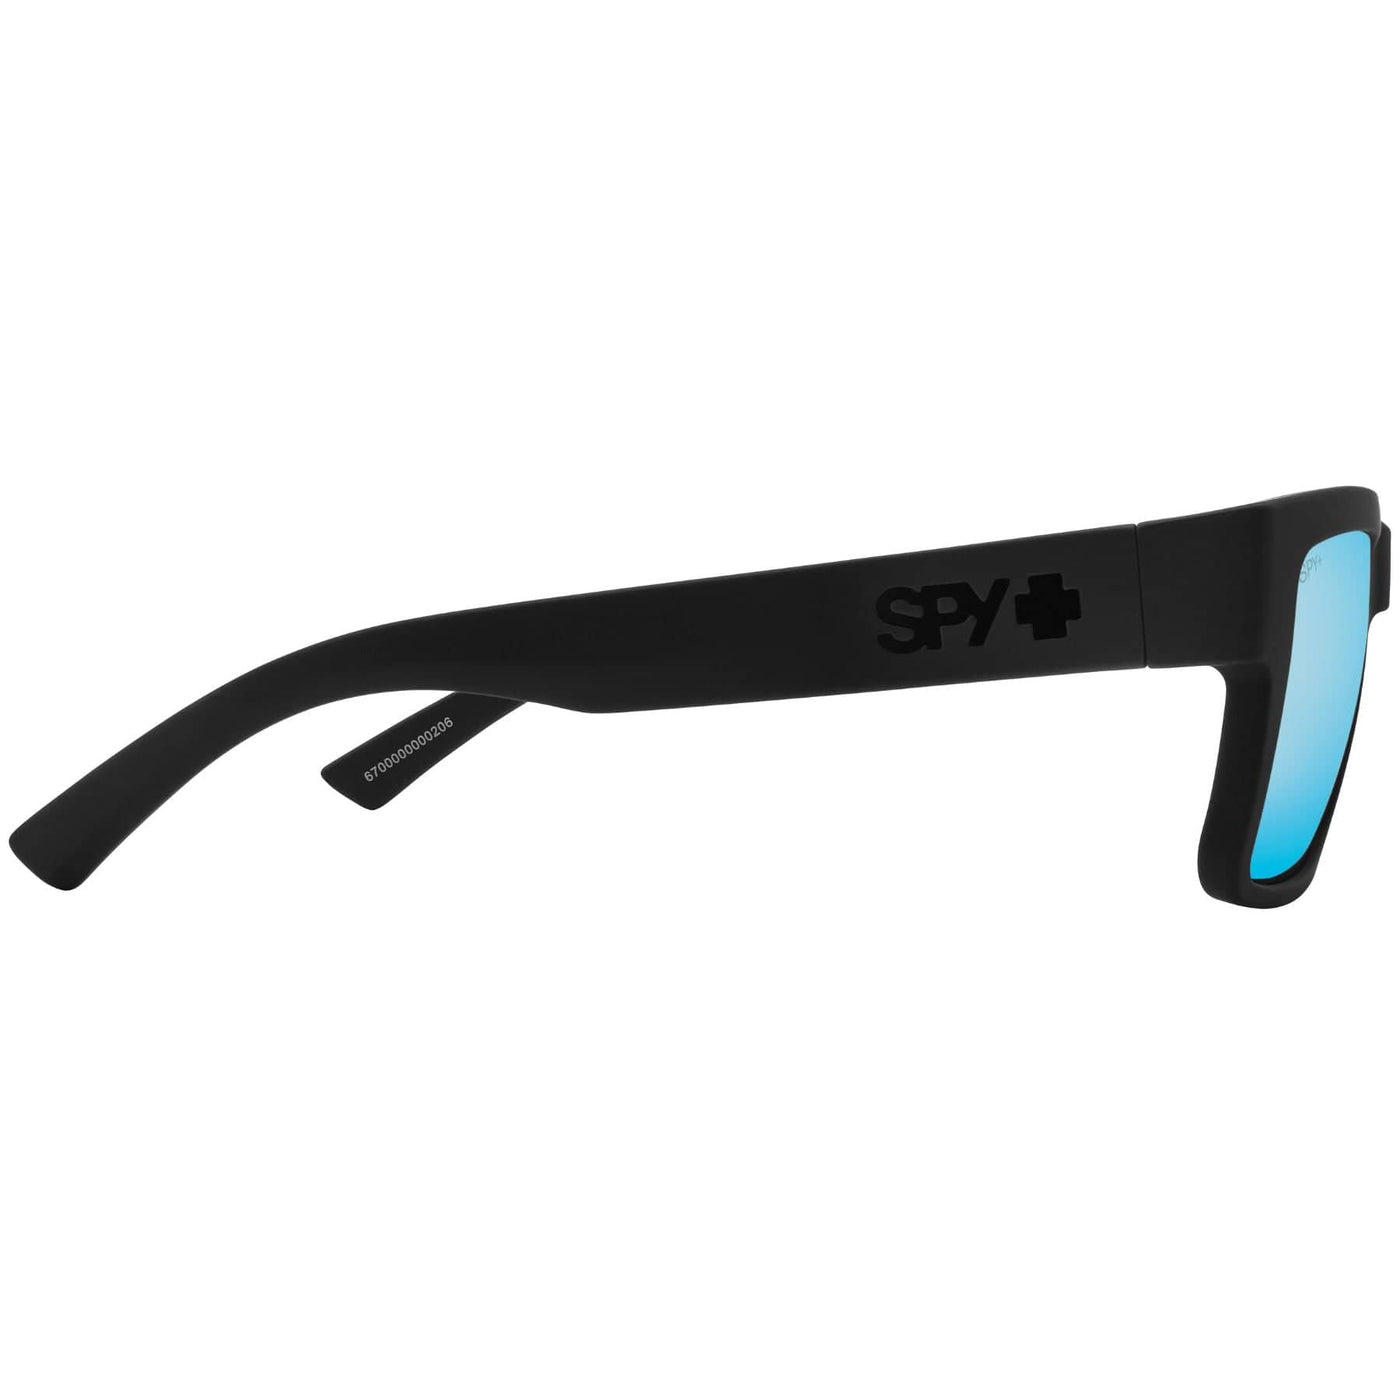 SPY MONTANA Polarized Sunglasses, Happy BOOST - Blue 8Lines Shop - Fast Shipping